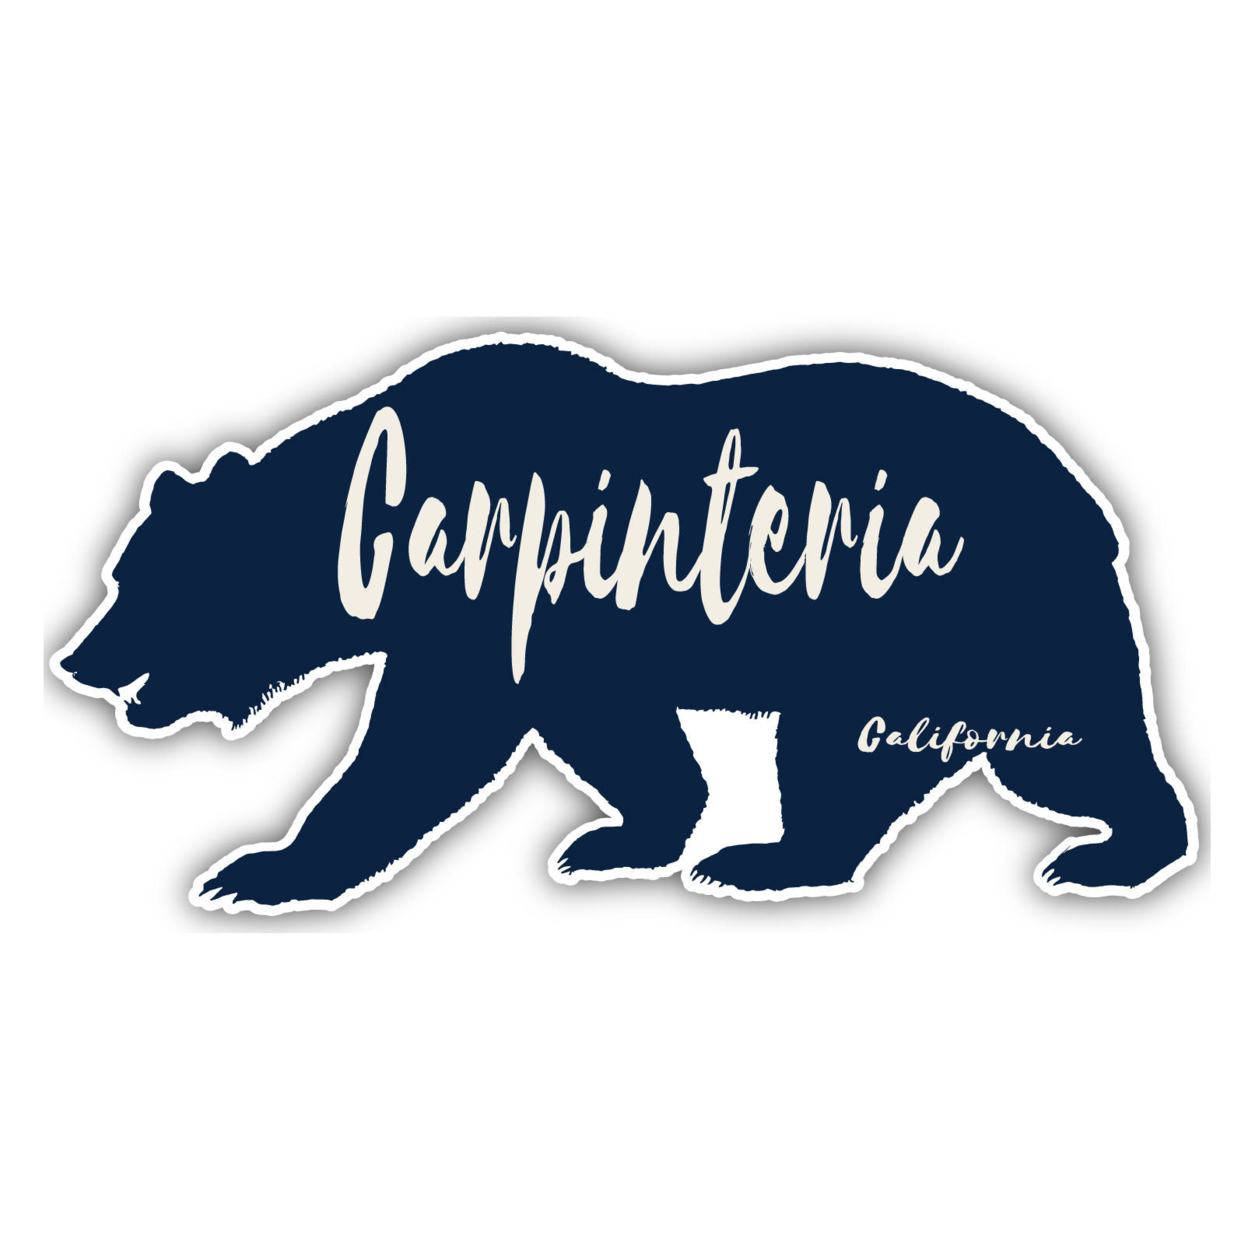 Carpinteria California Souvenir Decorative Stickers (Choose Theme And Size) - Single Unit, 2-Inch, Bear